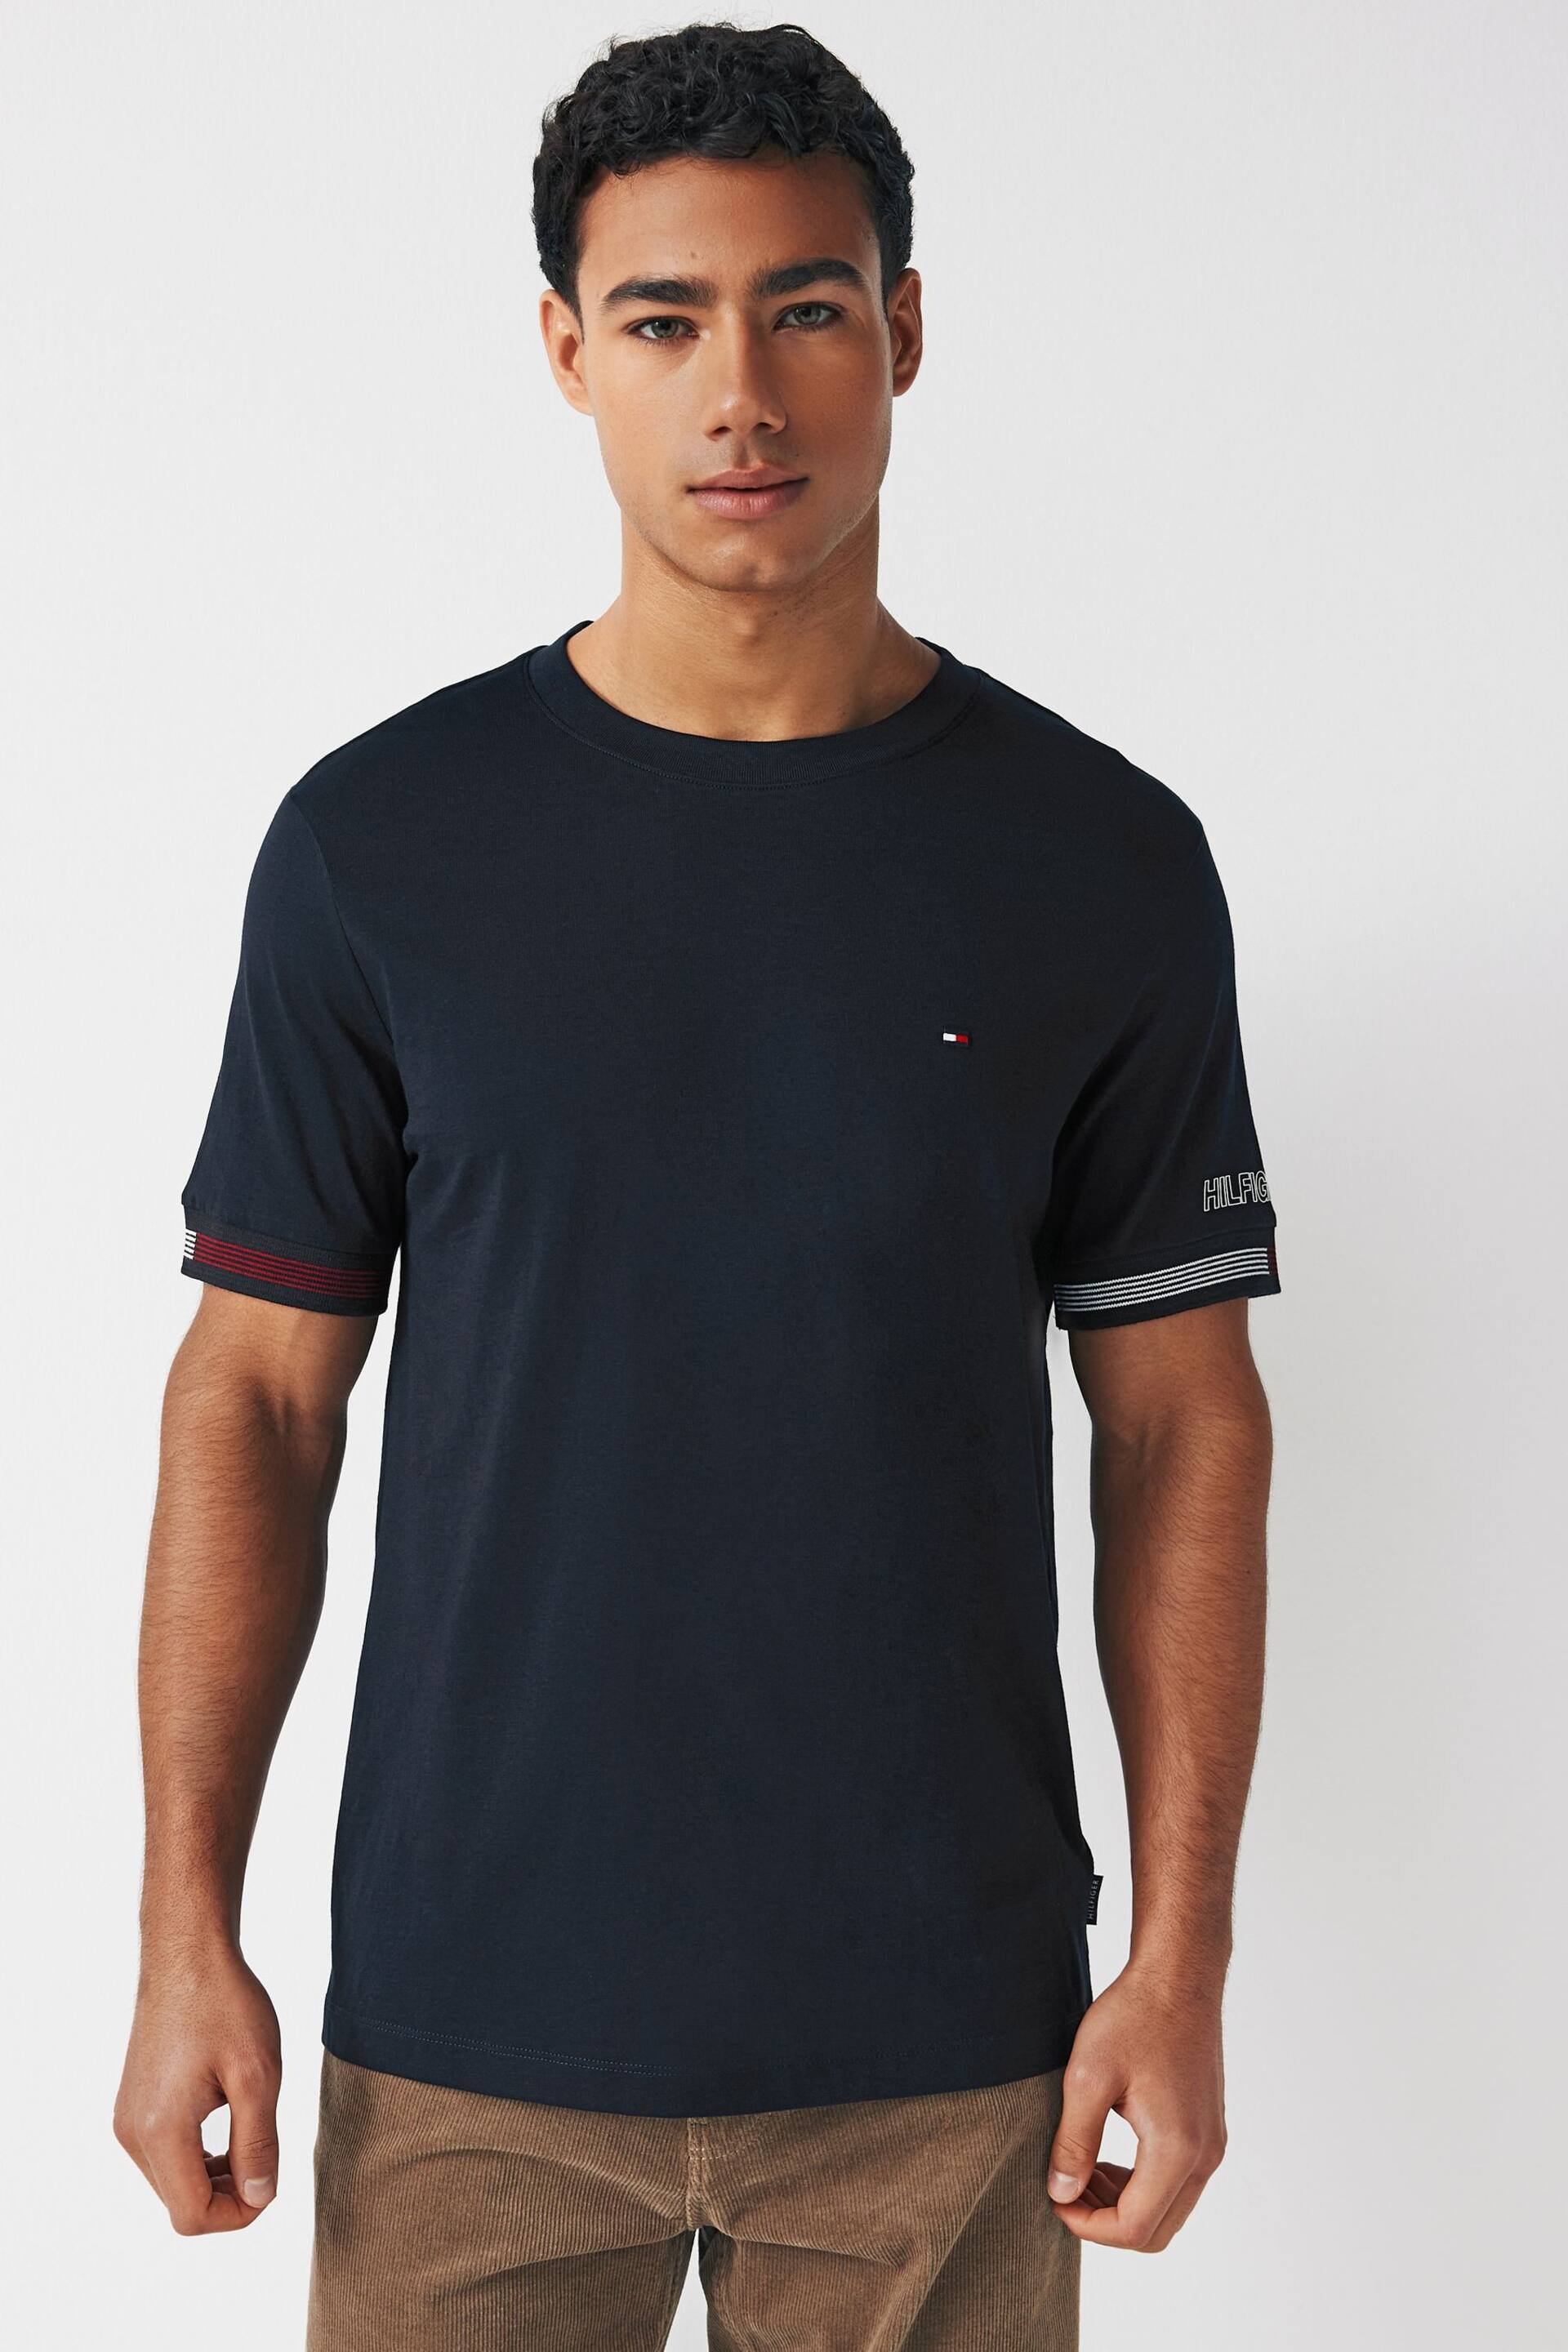 Tommy Hilfiger Flag Cuff T-Shirt - Image 1 of 6